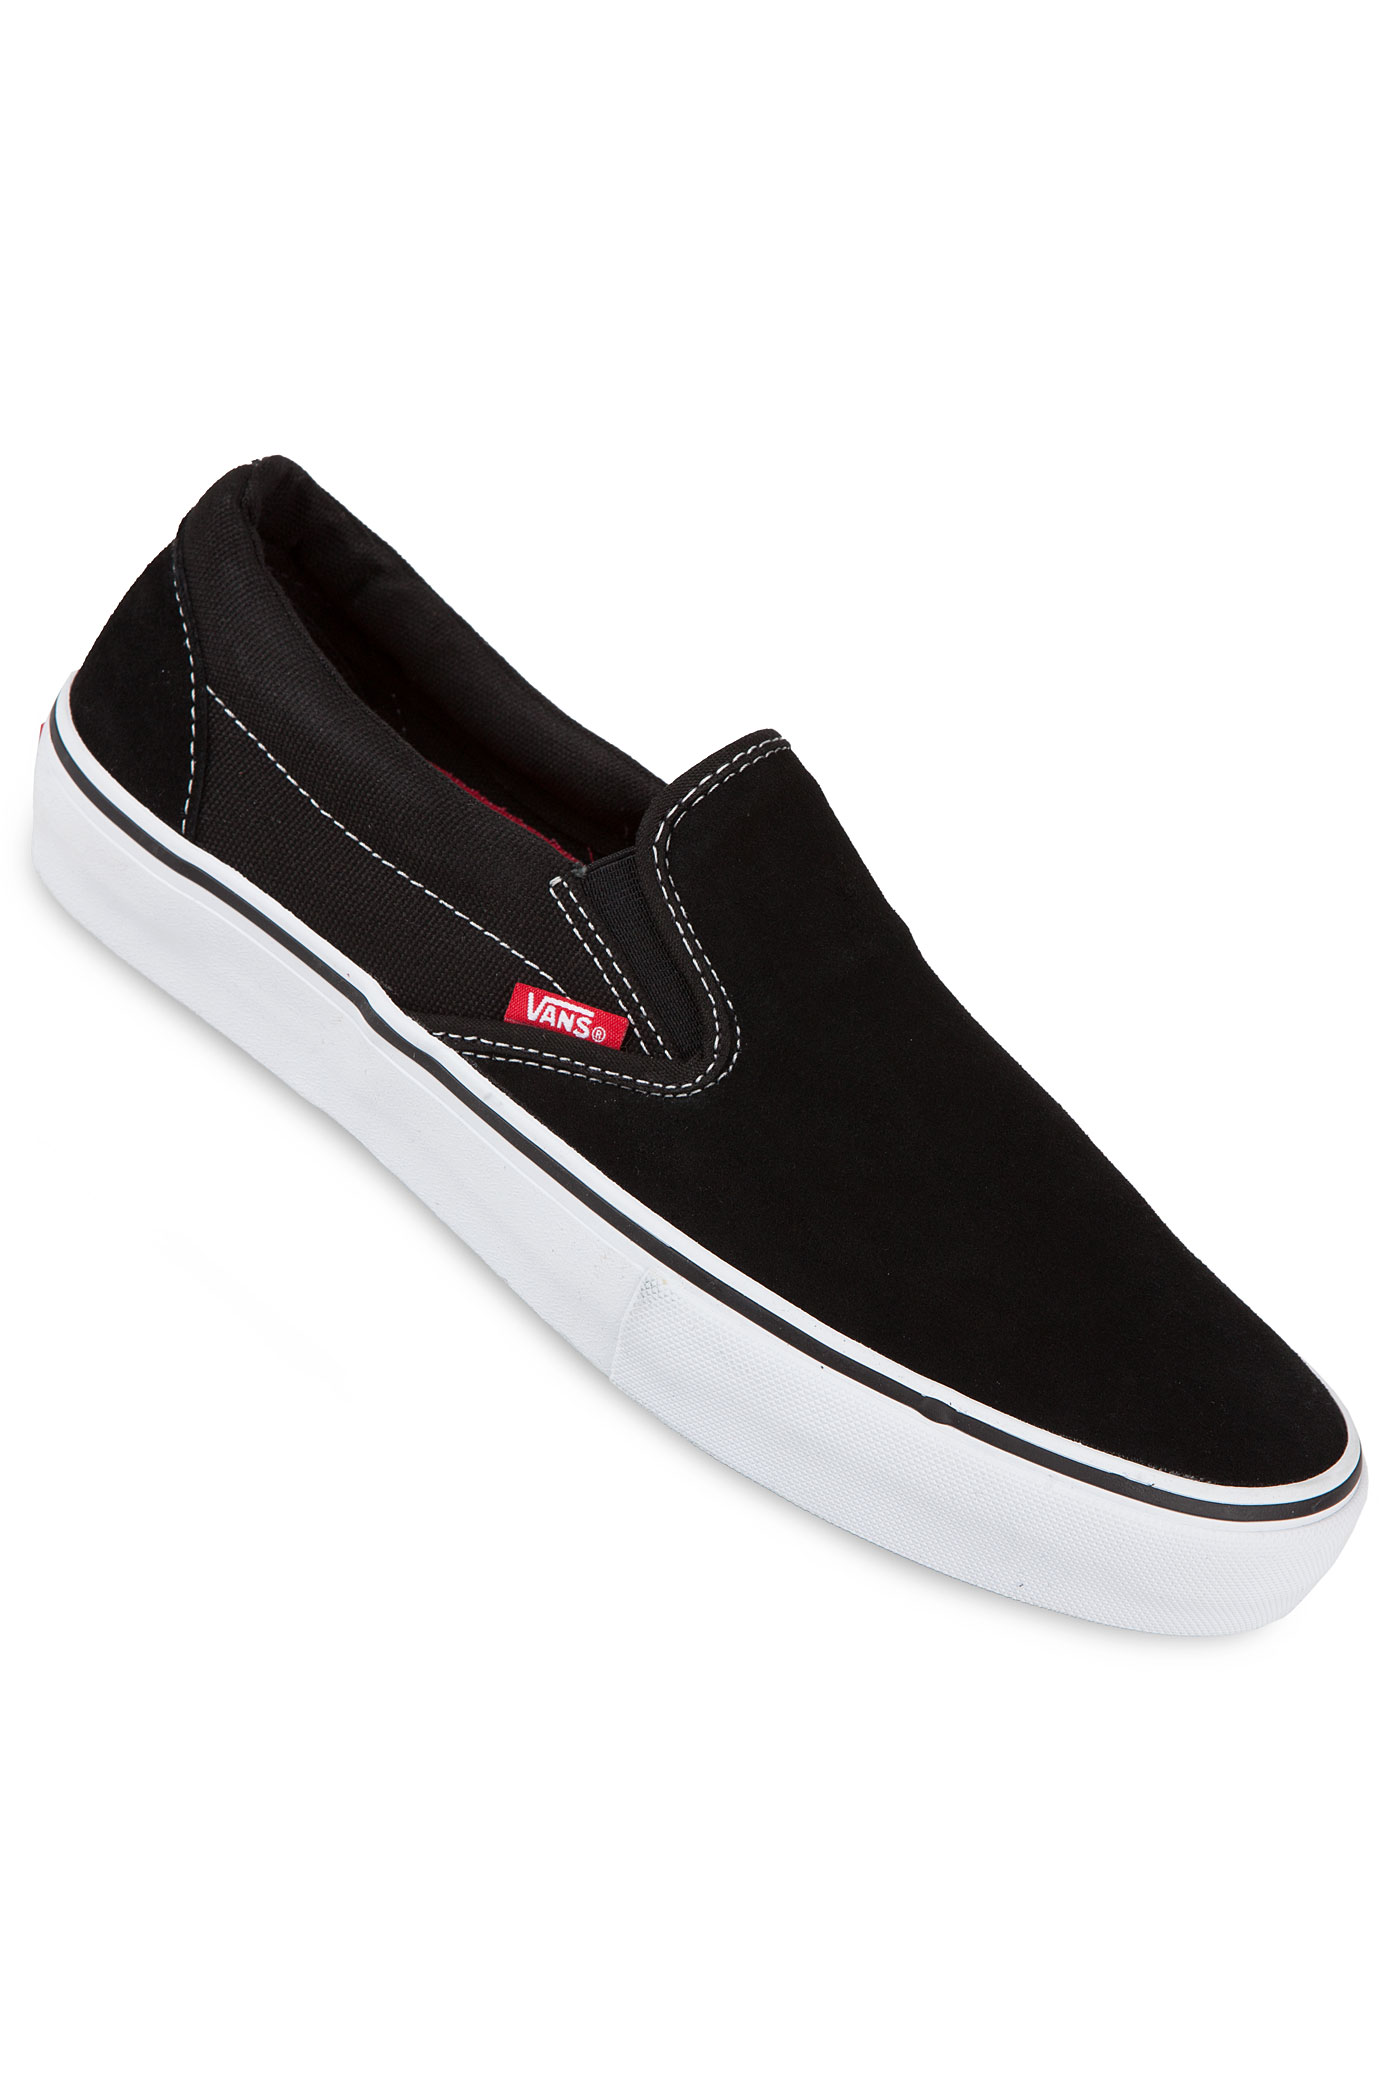 Vans Slip-On Pro Suede Shoe (black white gum) buy at skatedeluxe